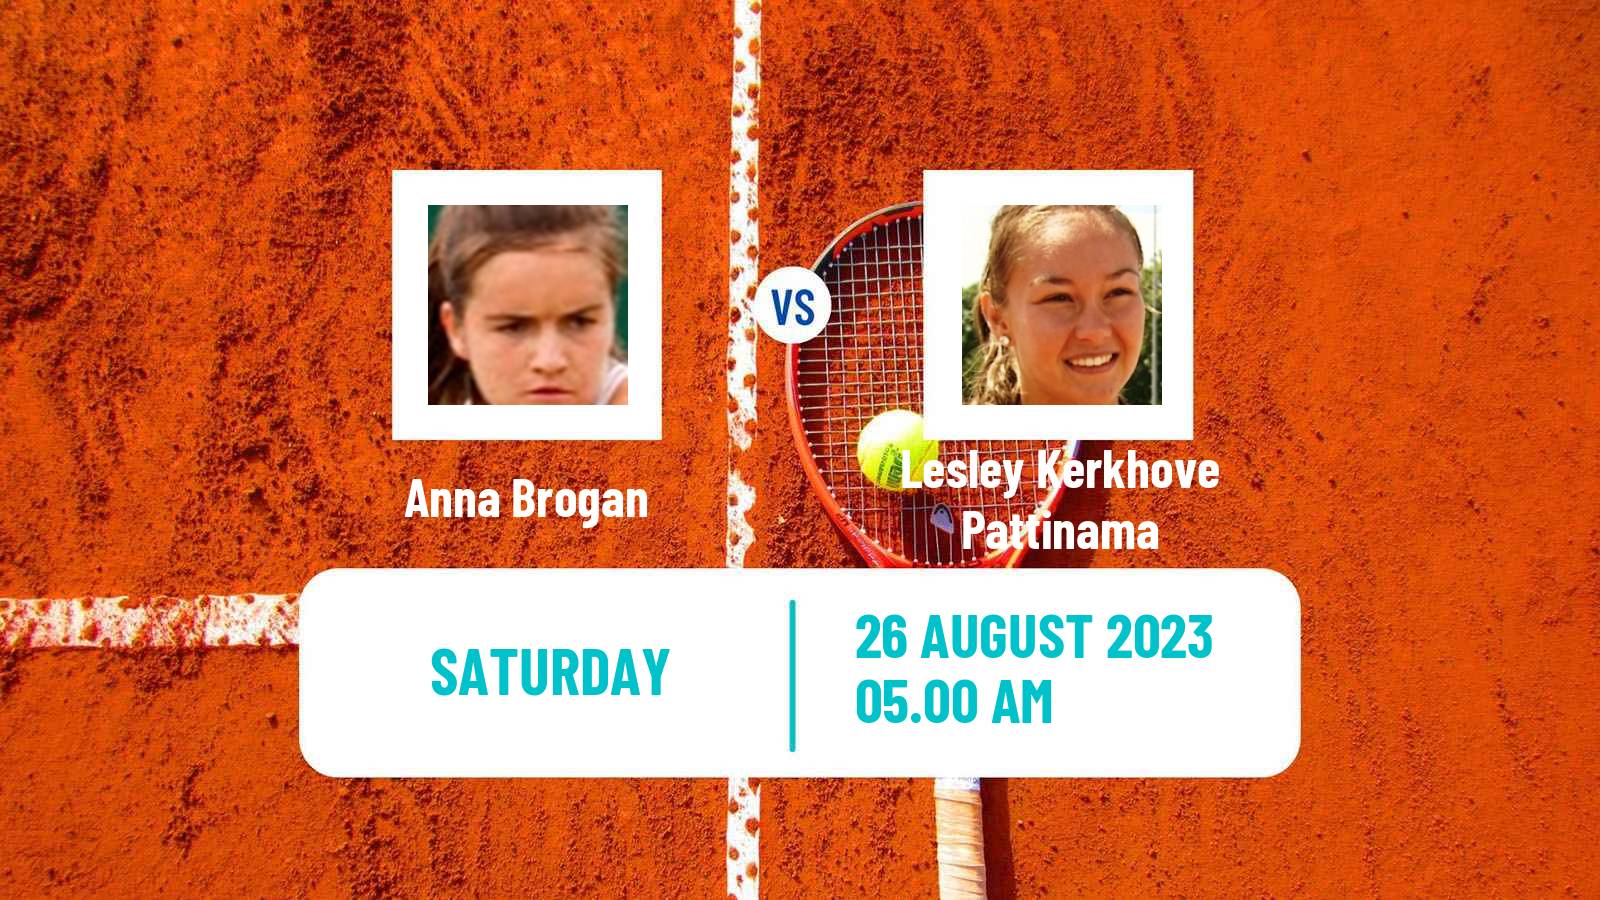 Tennis ITF W25 Vigo Women Anna Brogan - Lesley Kerkhove Pattinama